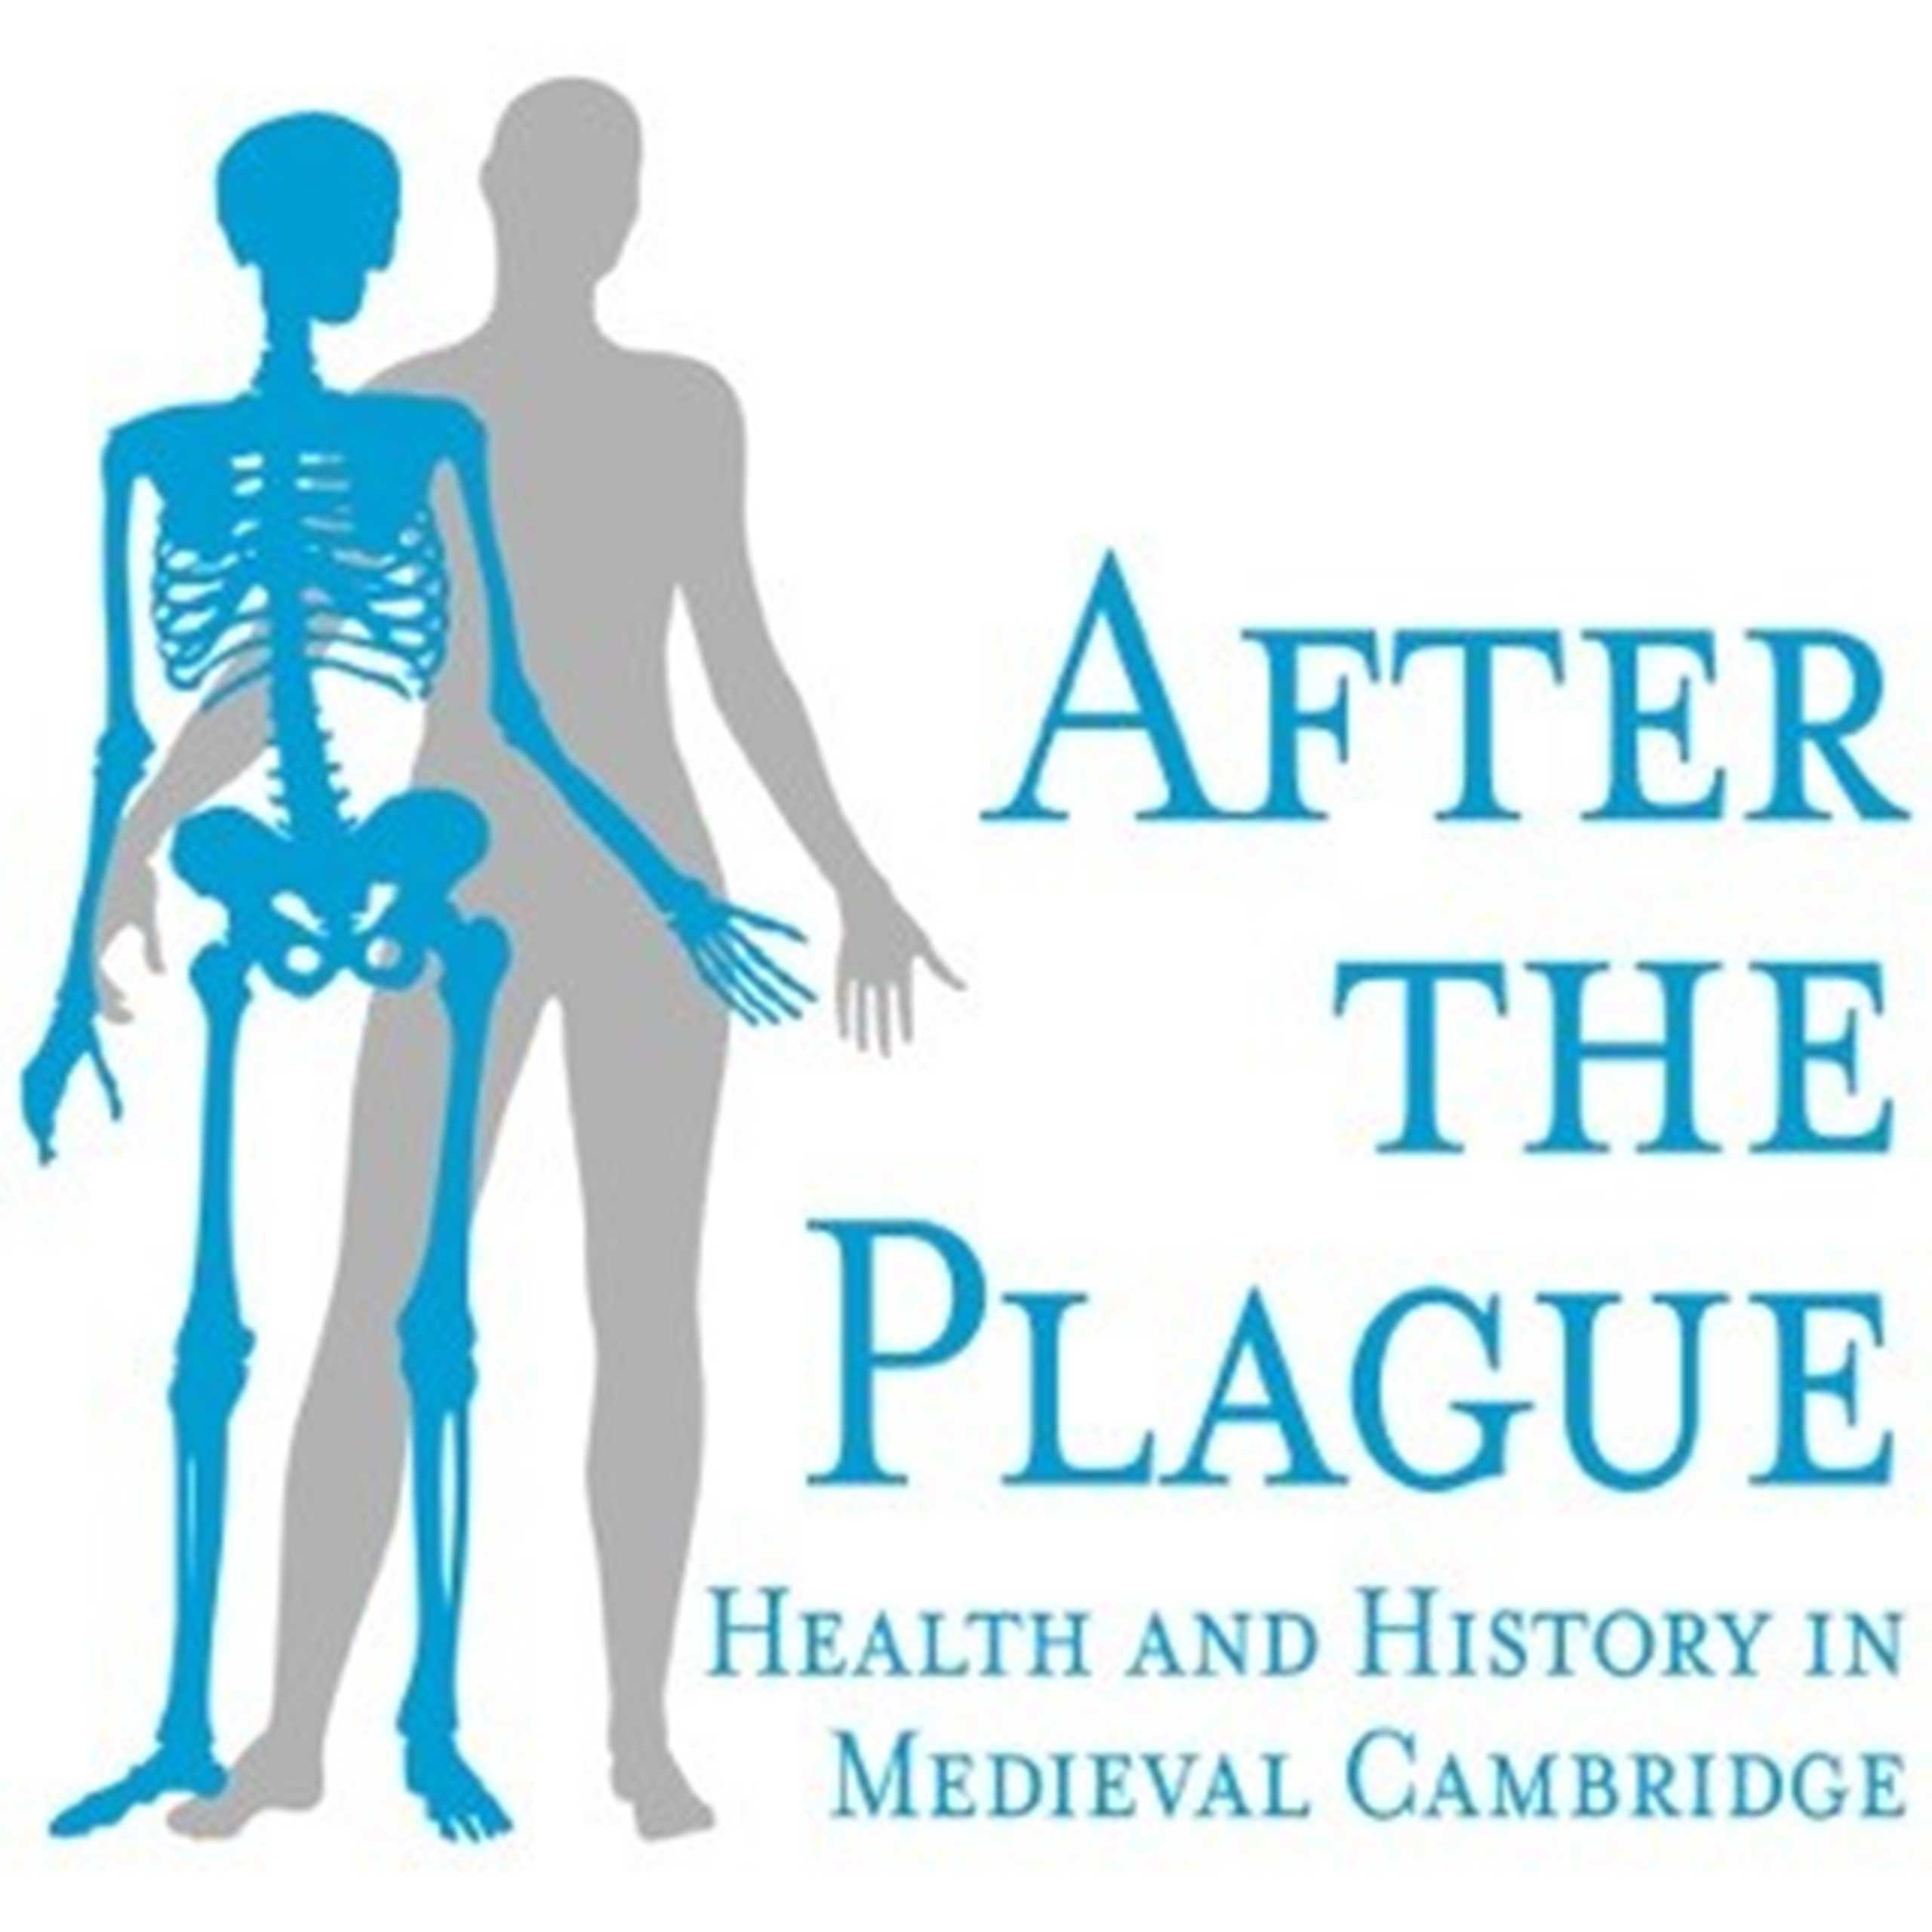 After the Plague